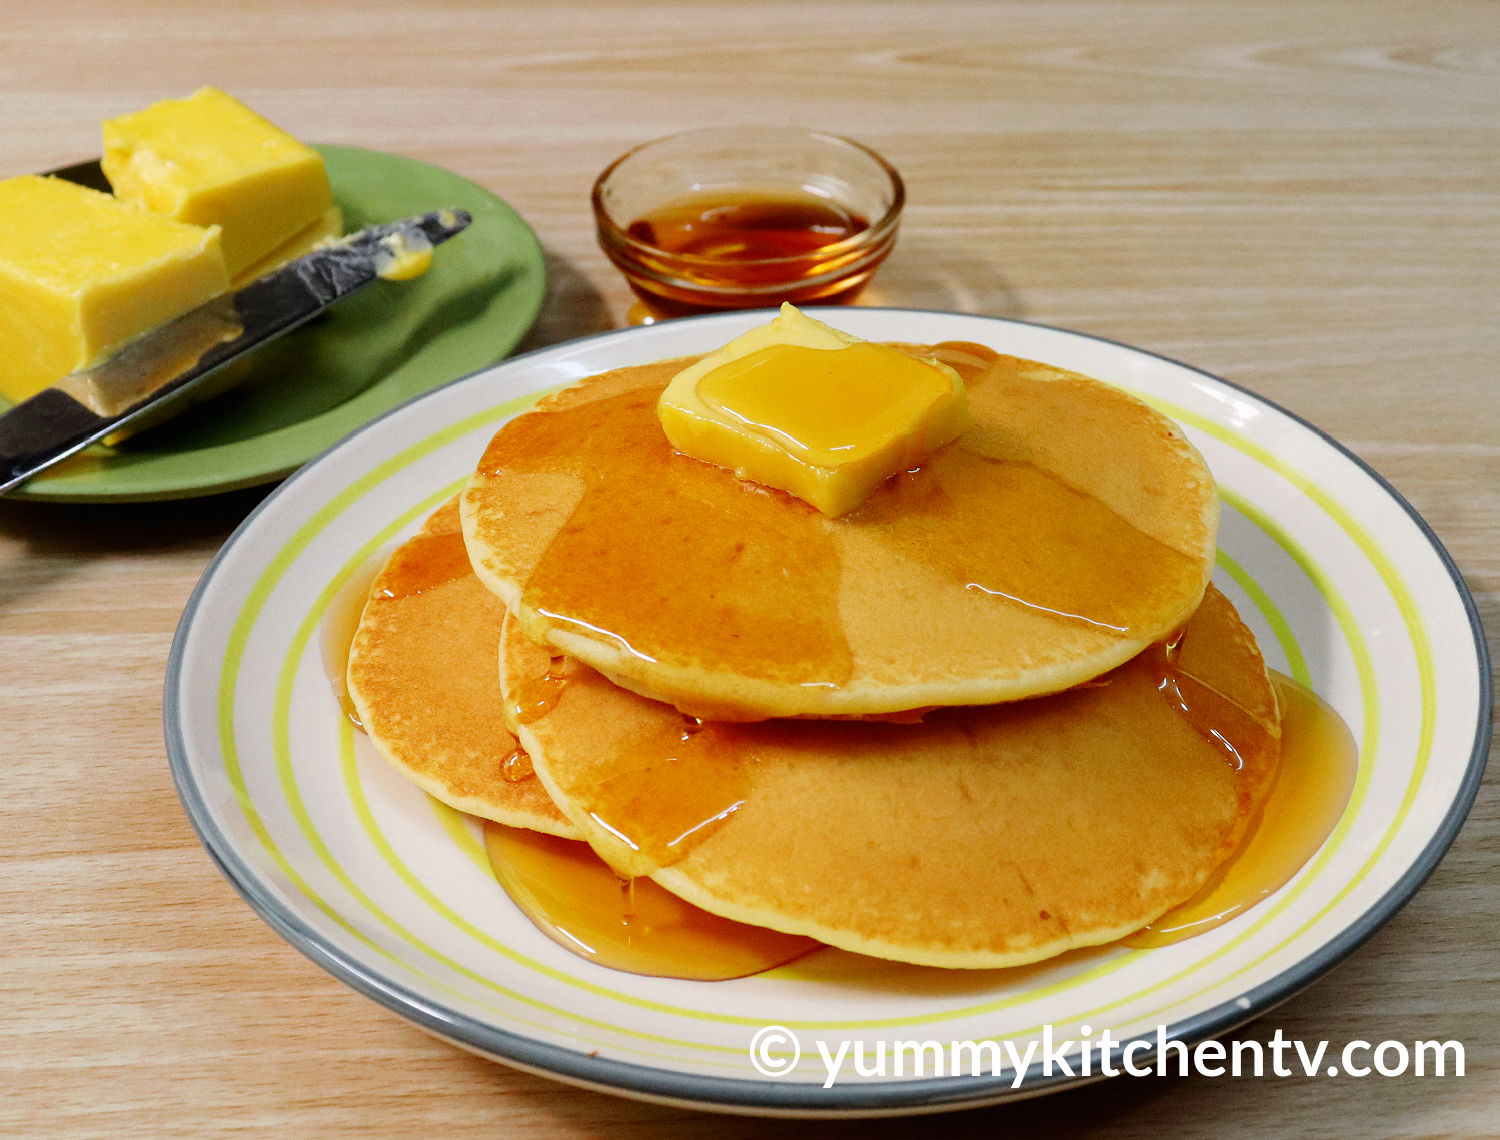 How to Make Pancakes without Baking Powder